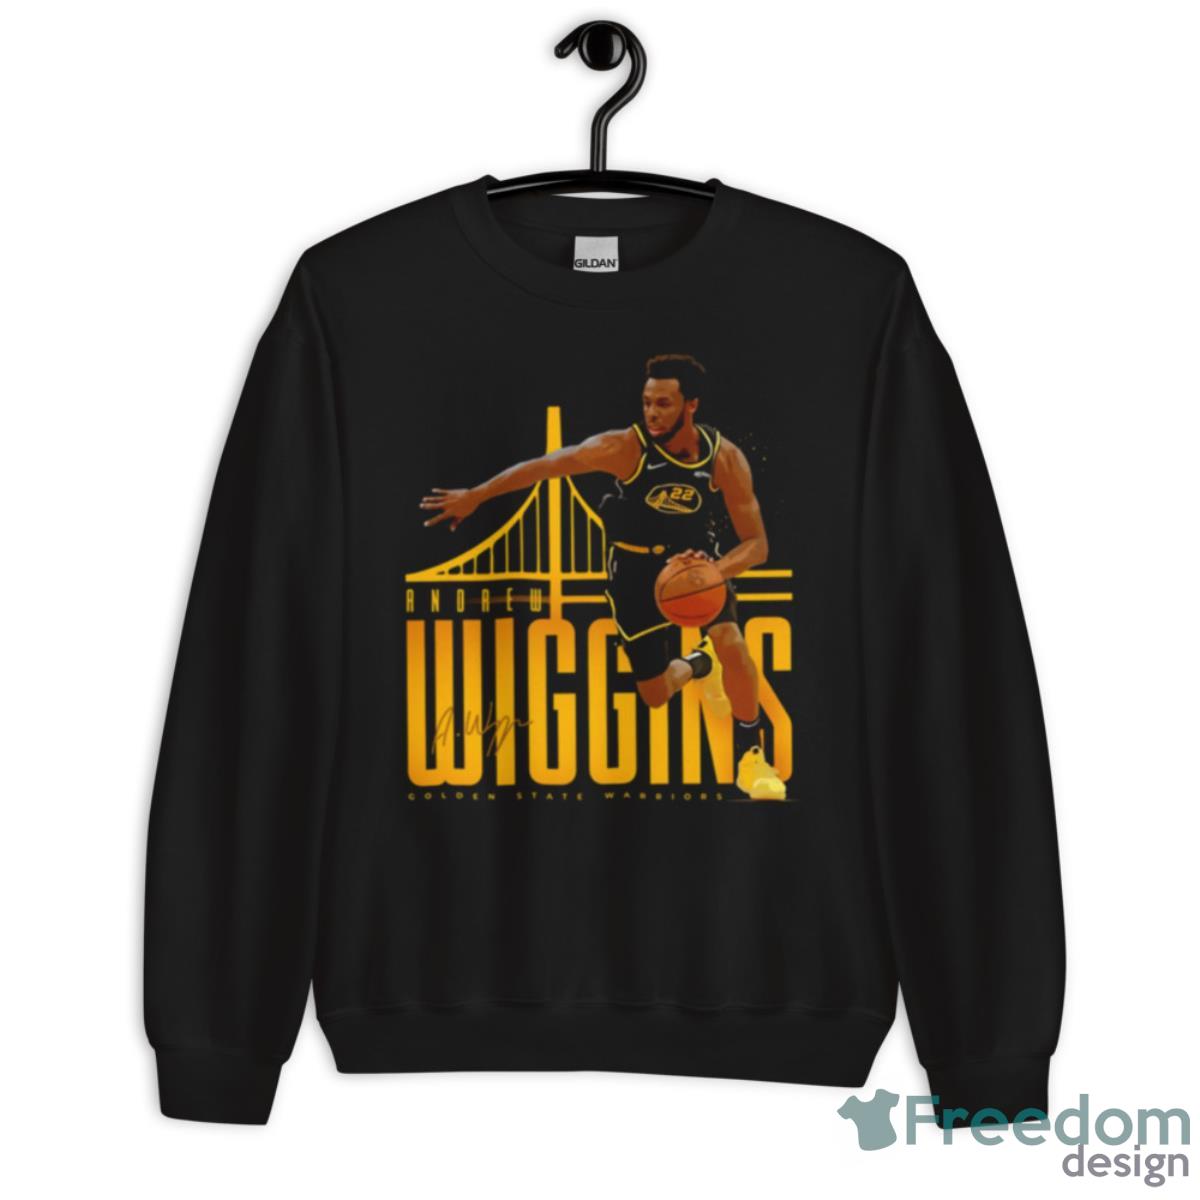 Andrew Wiggins Golden State Warriors Number 22 Basketball Sports Shirt